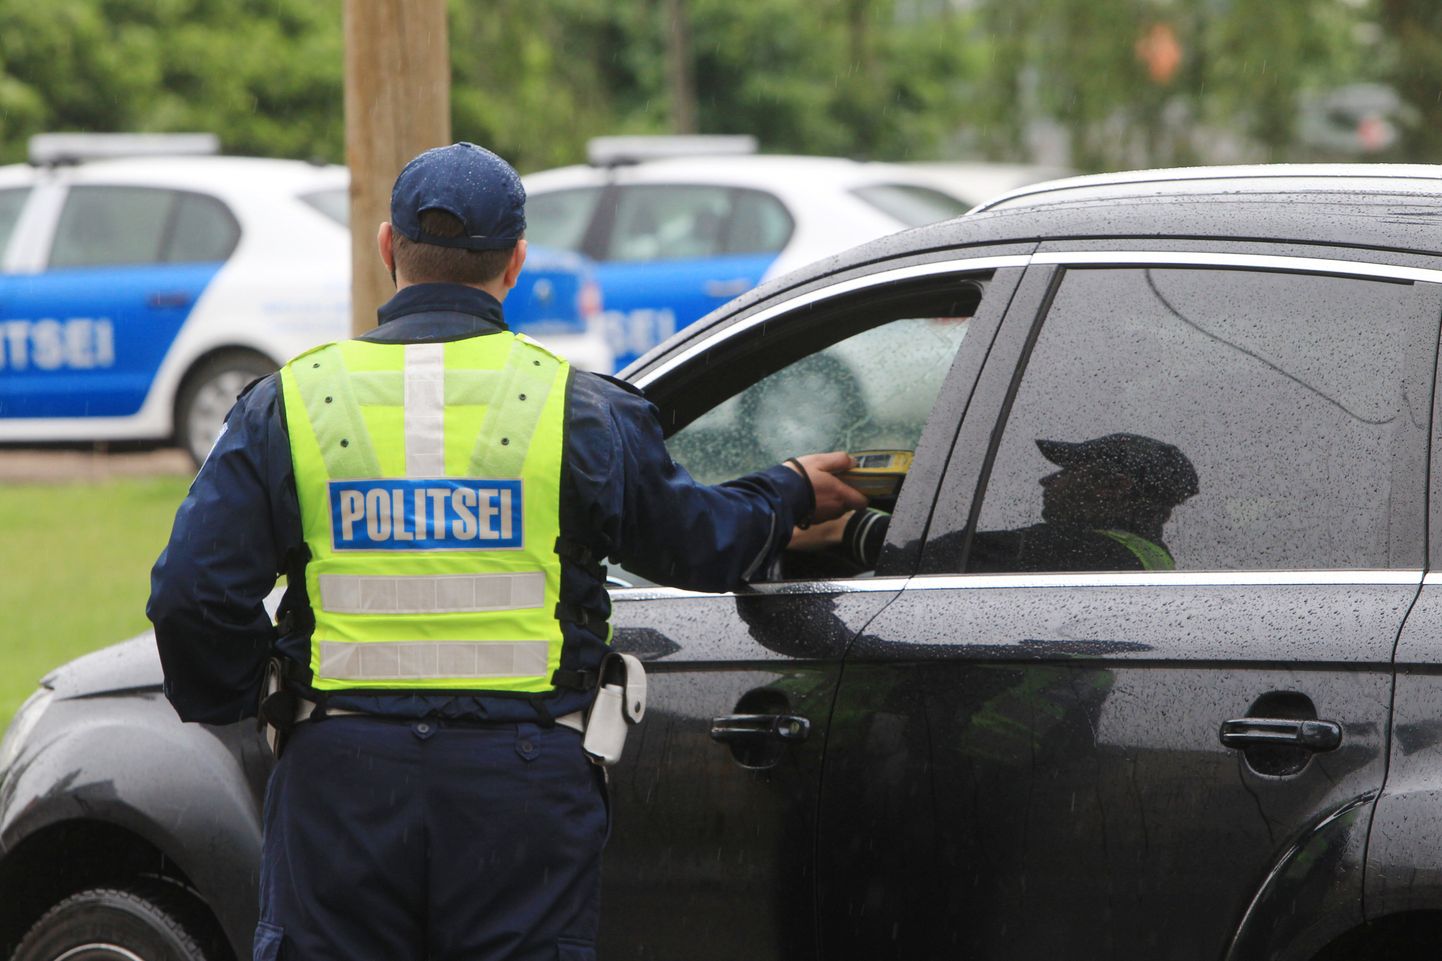 Politseinik autojuhi joovet kontrollimas. Foto on illustreeriv.